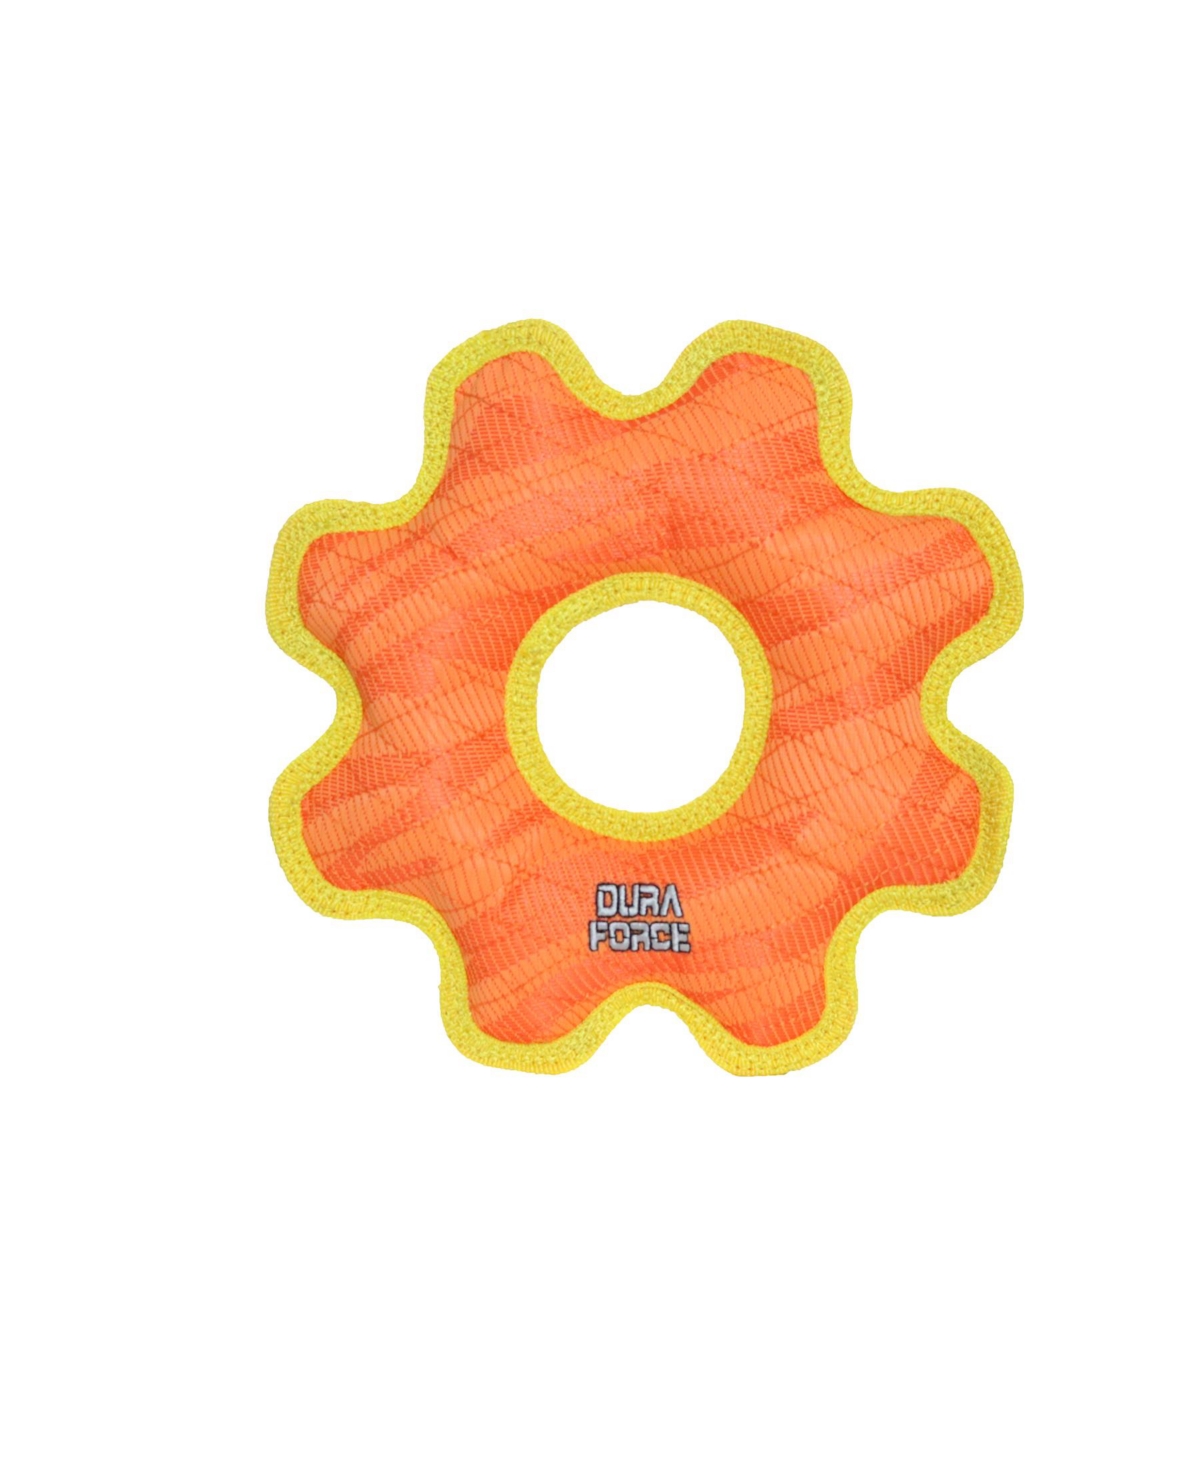 Med Gear Ring Tiger Orange-Yellow, Dog Toy - Bright Orange